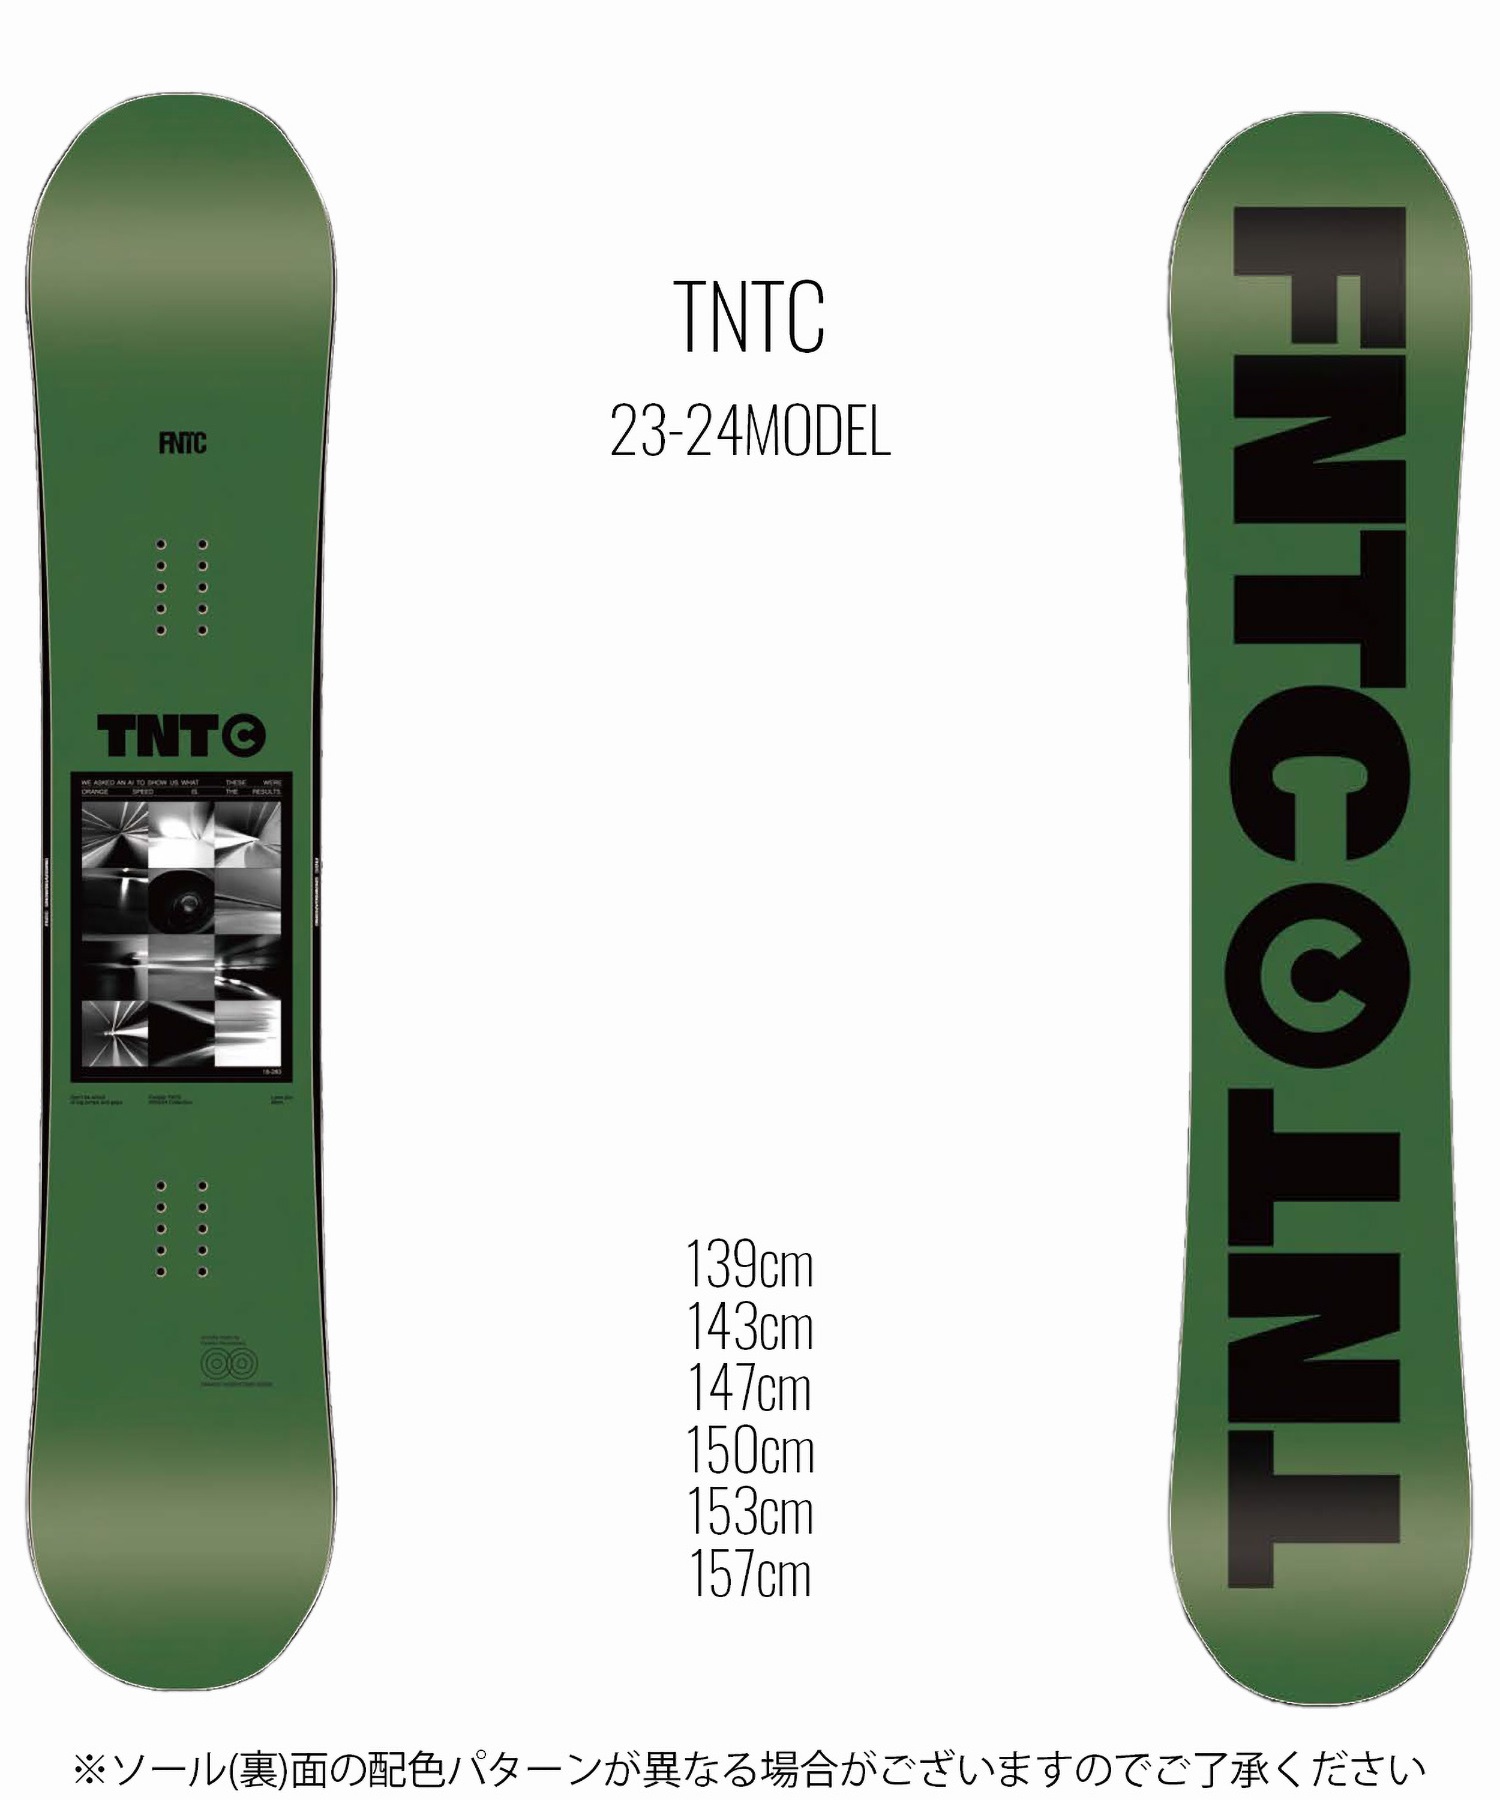 FNTC TNTC 21-22モデル 153cm | camillevieraservices.com